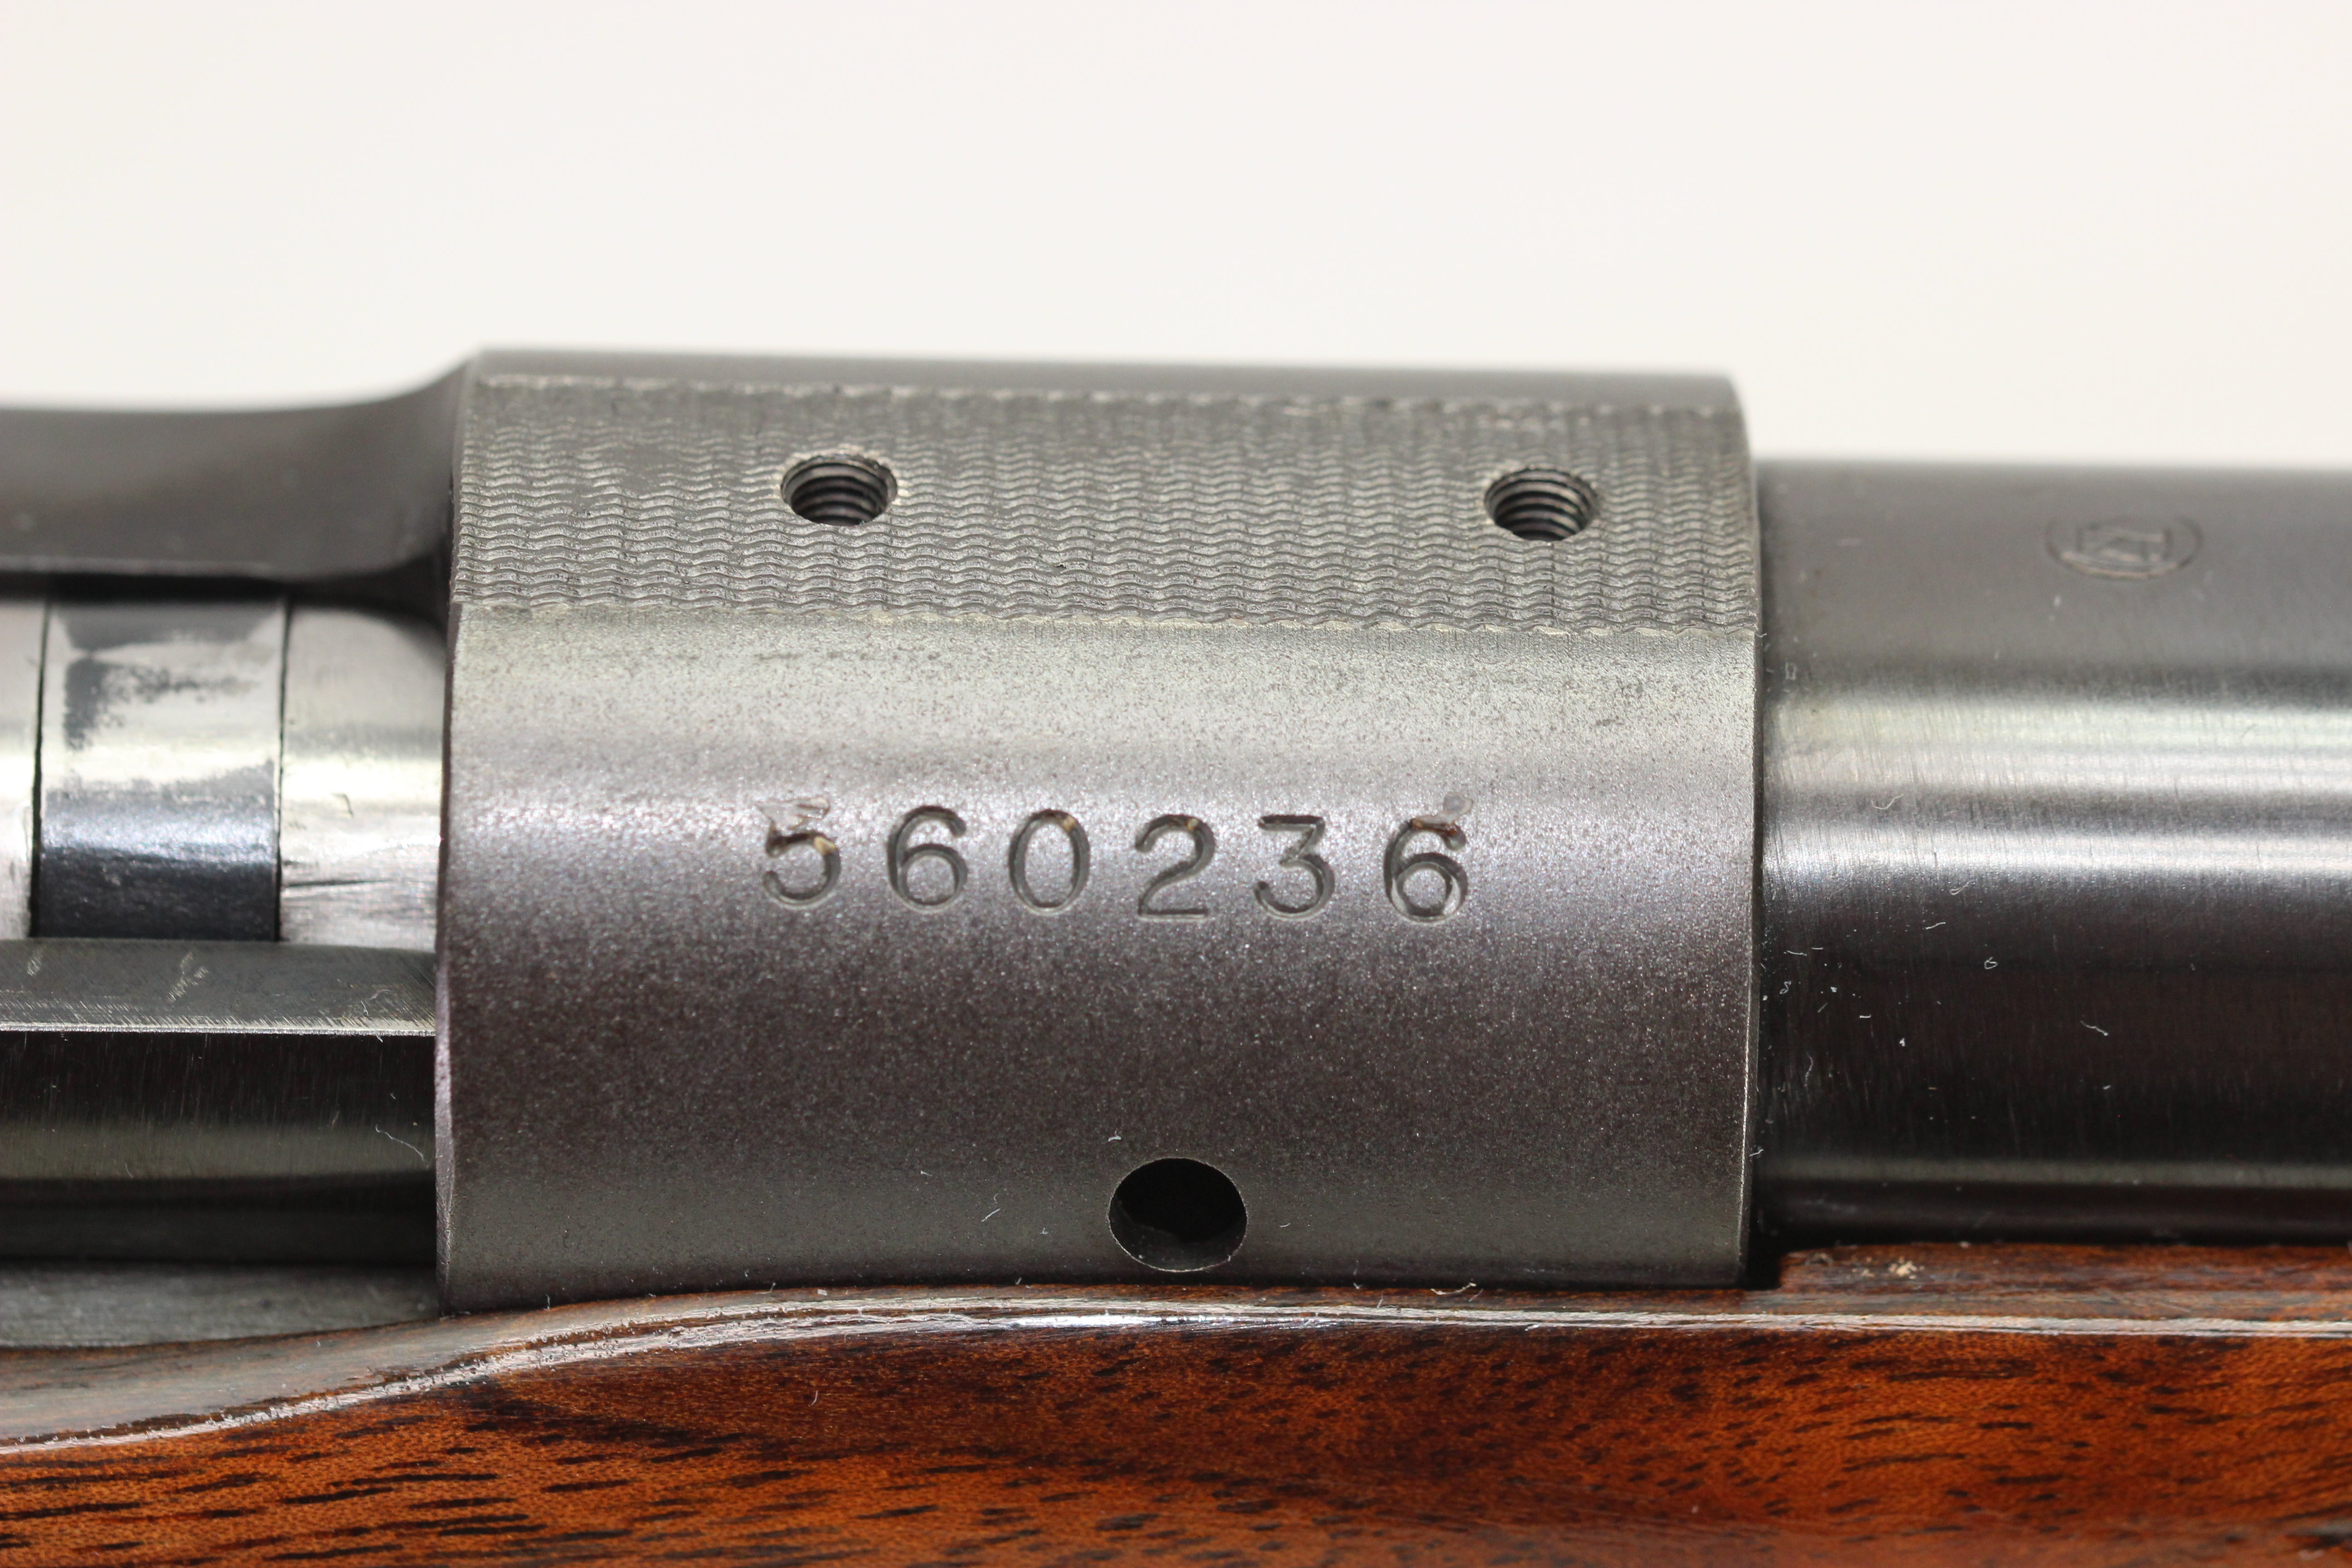 .300 Winchester Magnum "Alaskan" Rifle - 1962/1963